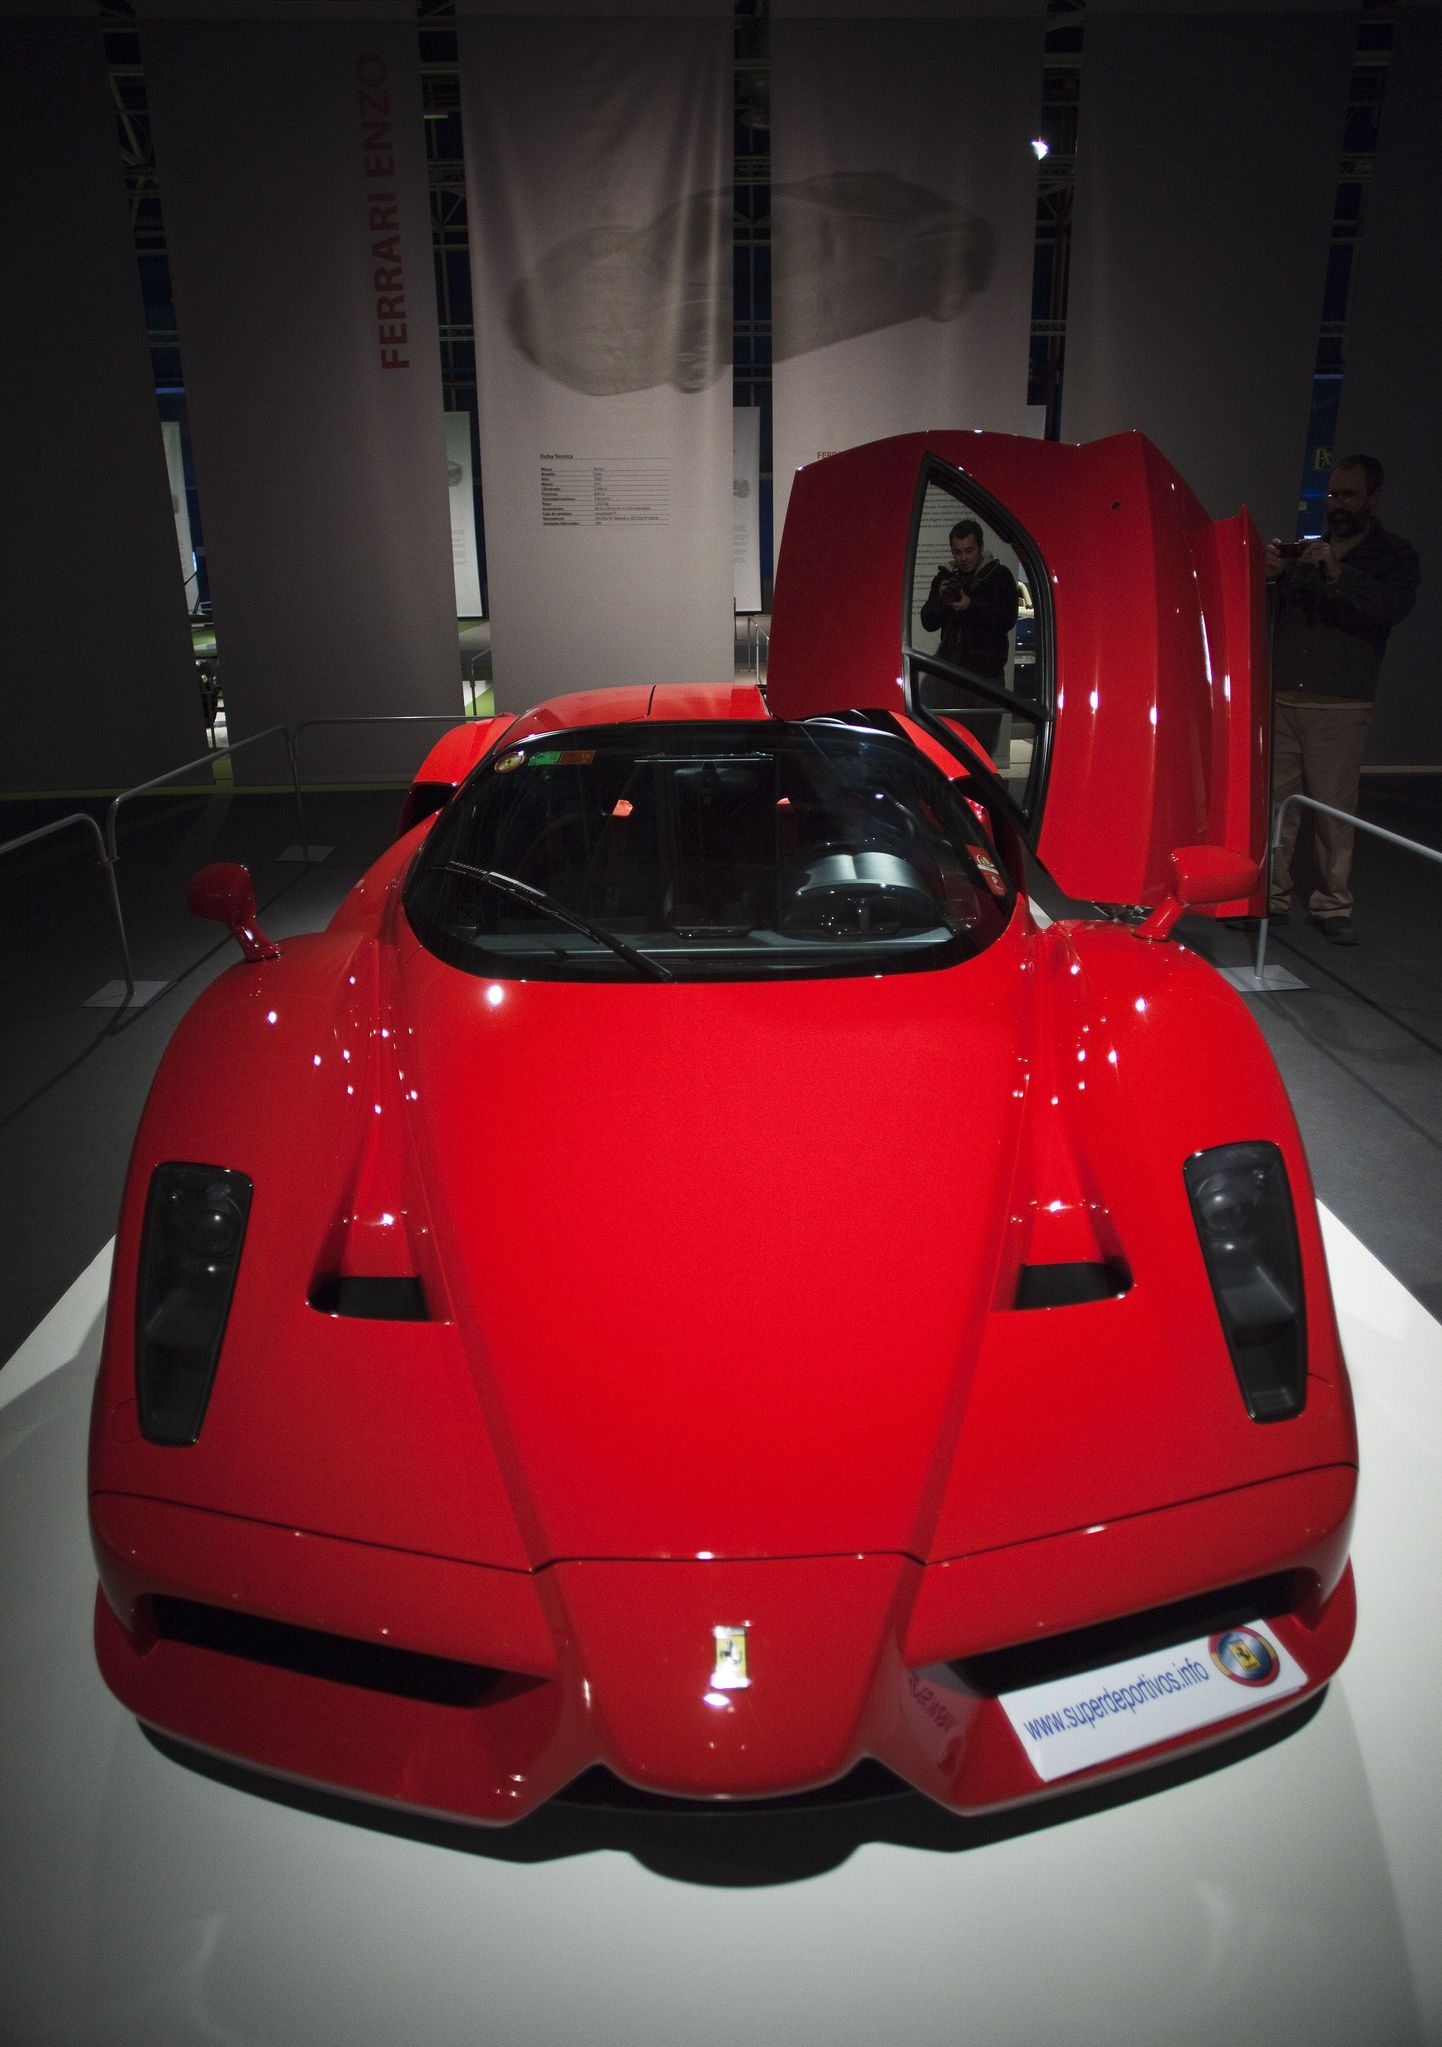 Pildil Ferrari Enzo, mille järeltulijat esitletakse Genfi autonäitusel.